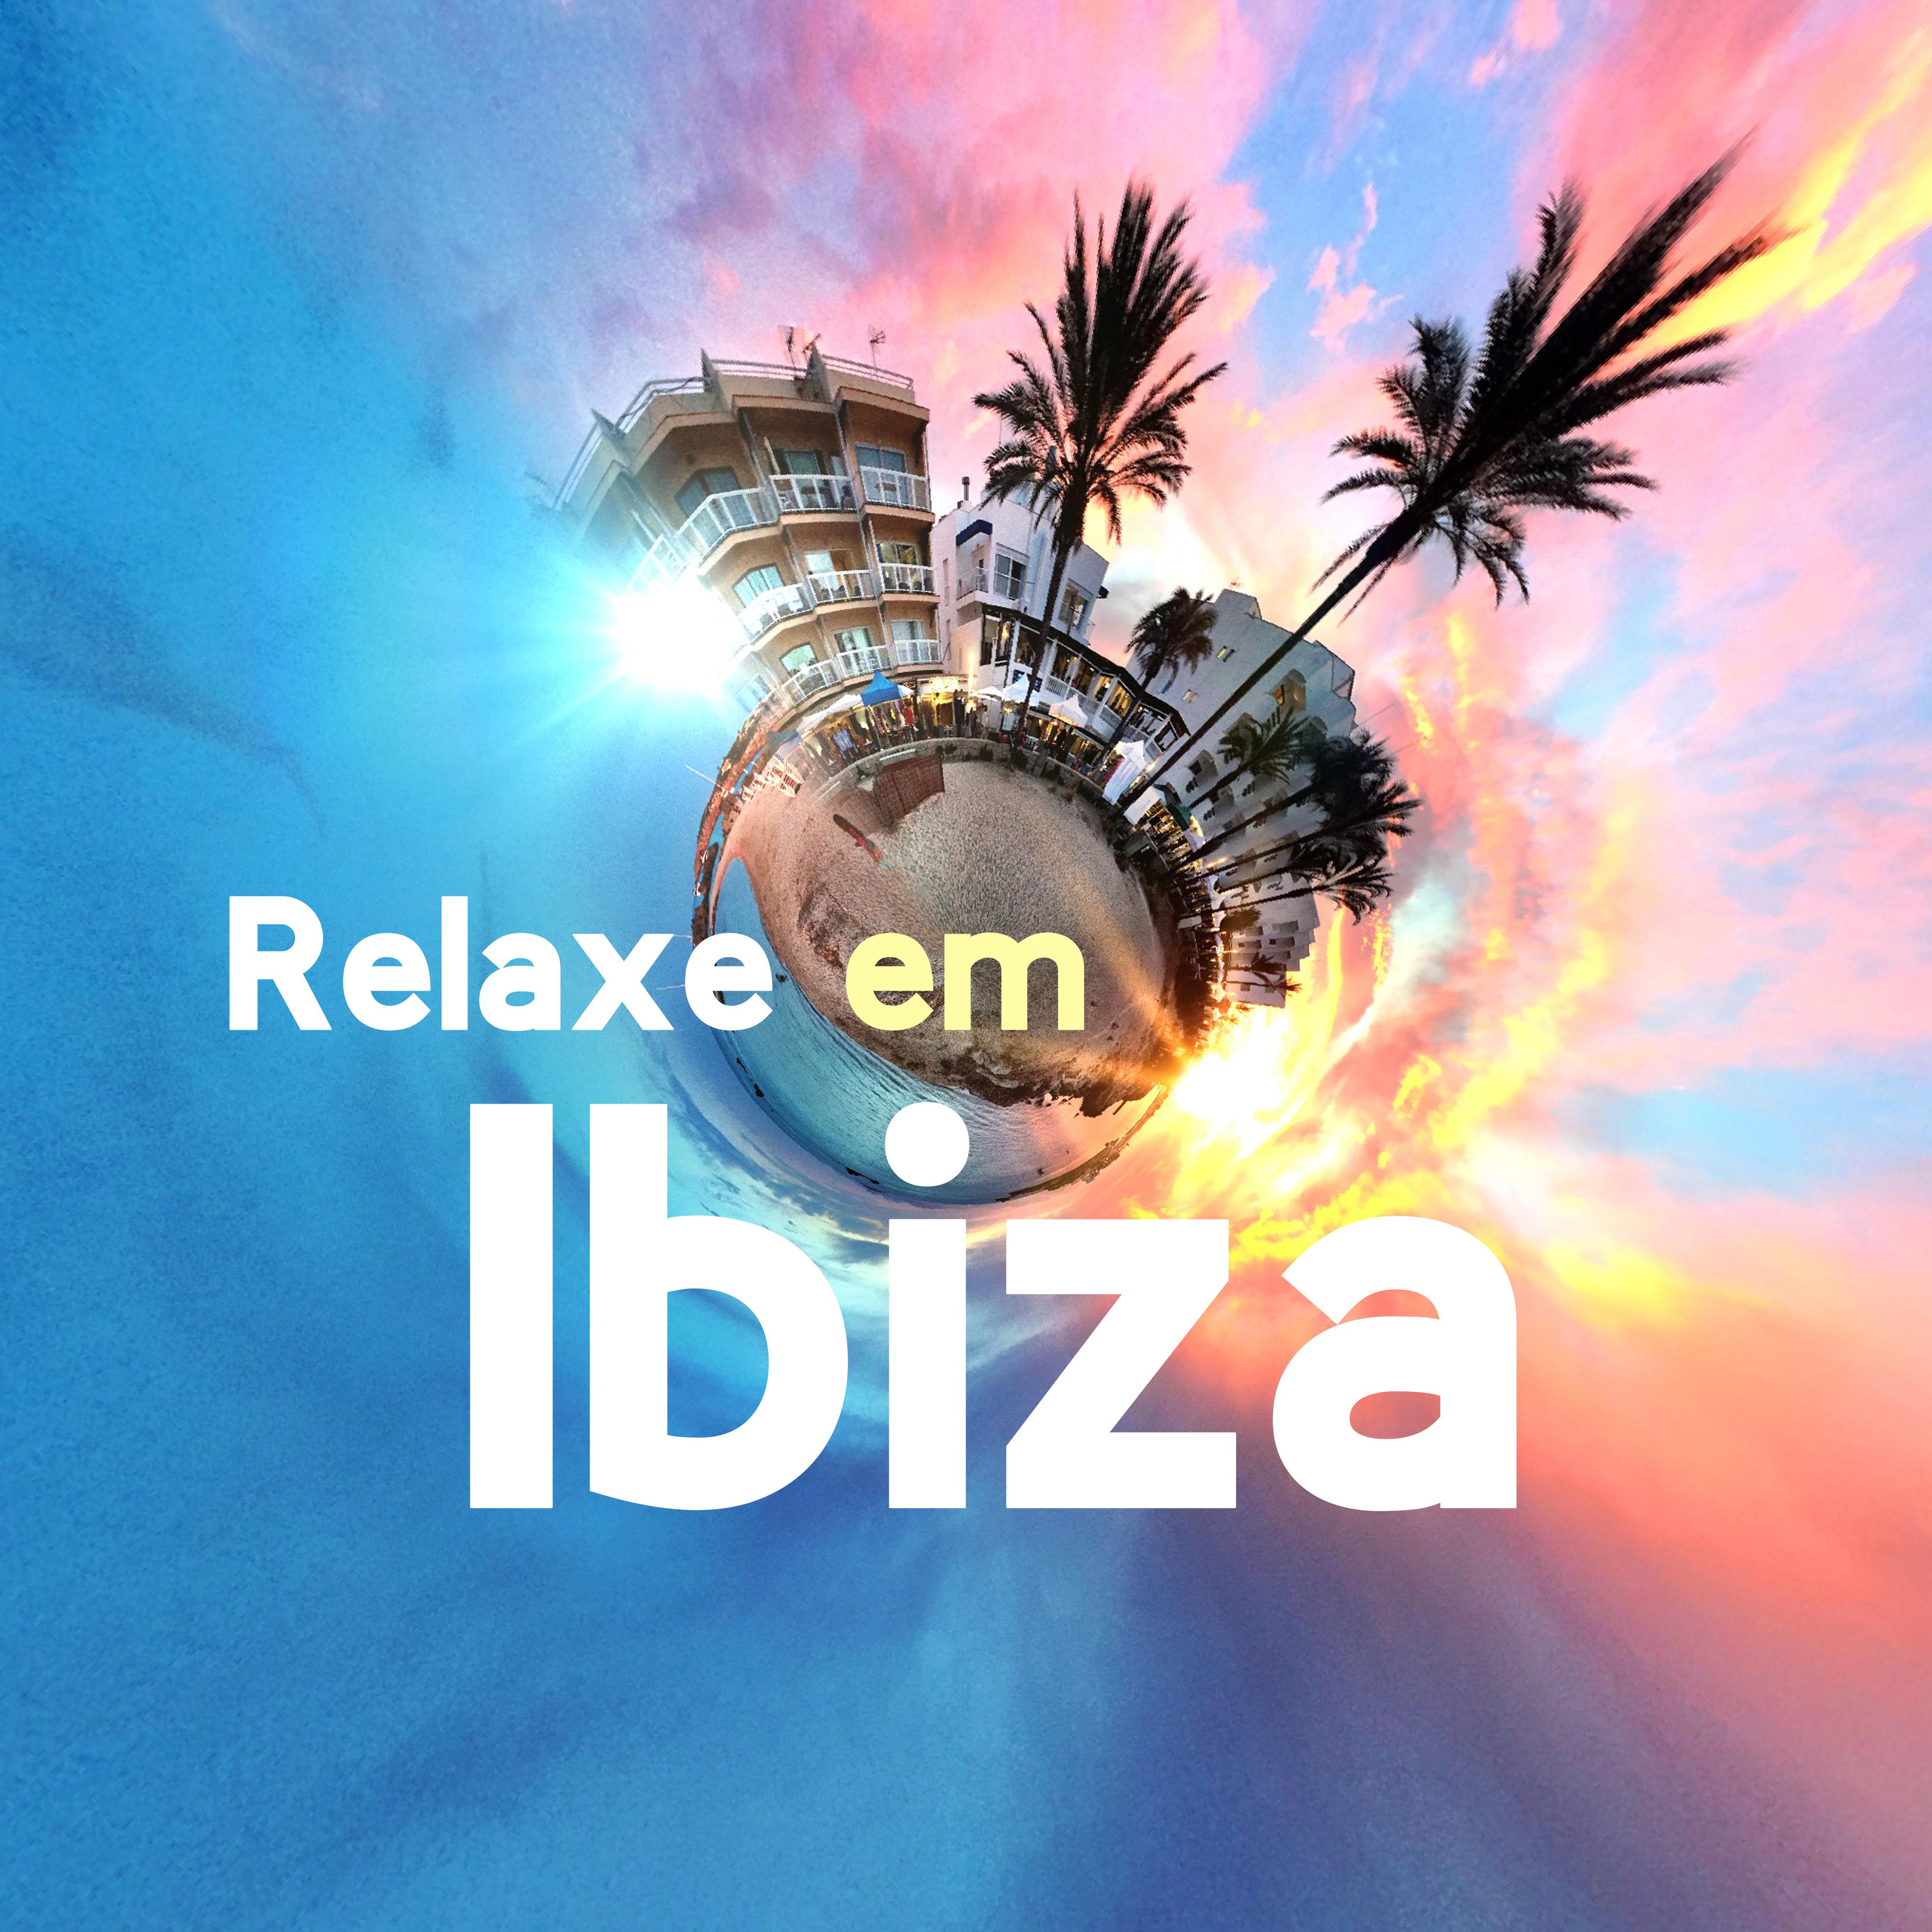 Relaxe em Ibiza  Mu sica Ambiente Tranquila Para Relaxamento Total, Momentos de Descanso e Relaxamento